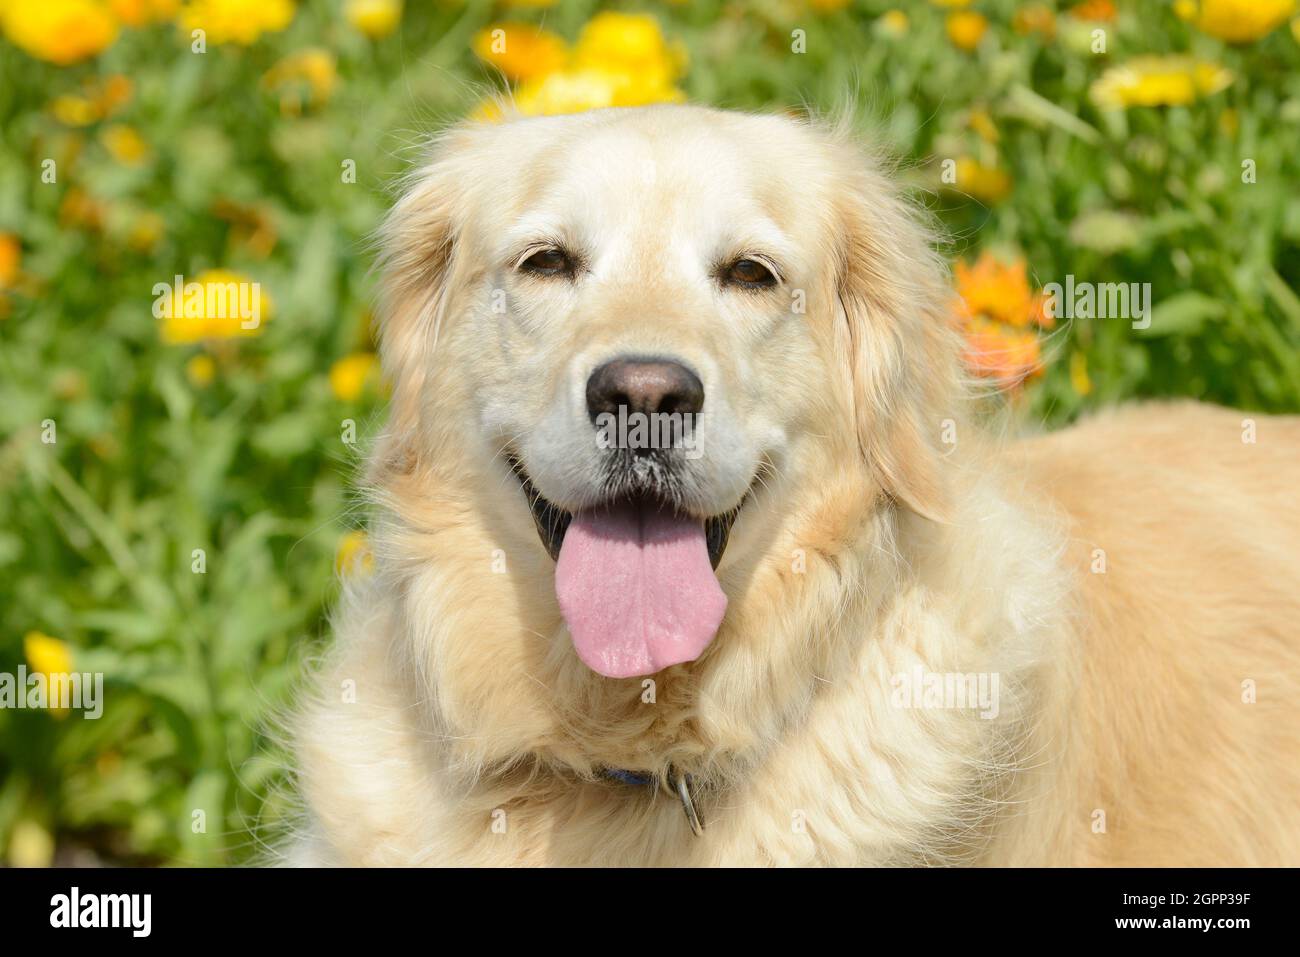 Adult dog  golden retriever portrait in front of flowers in the garden Stock Photo